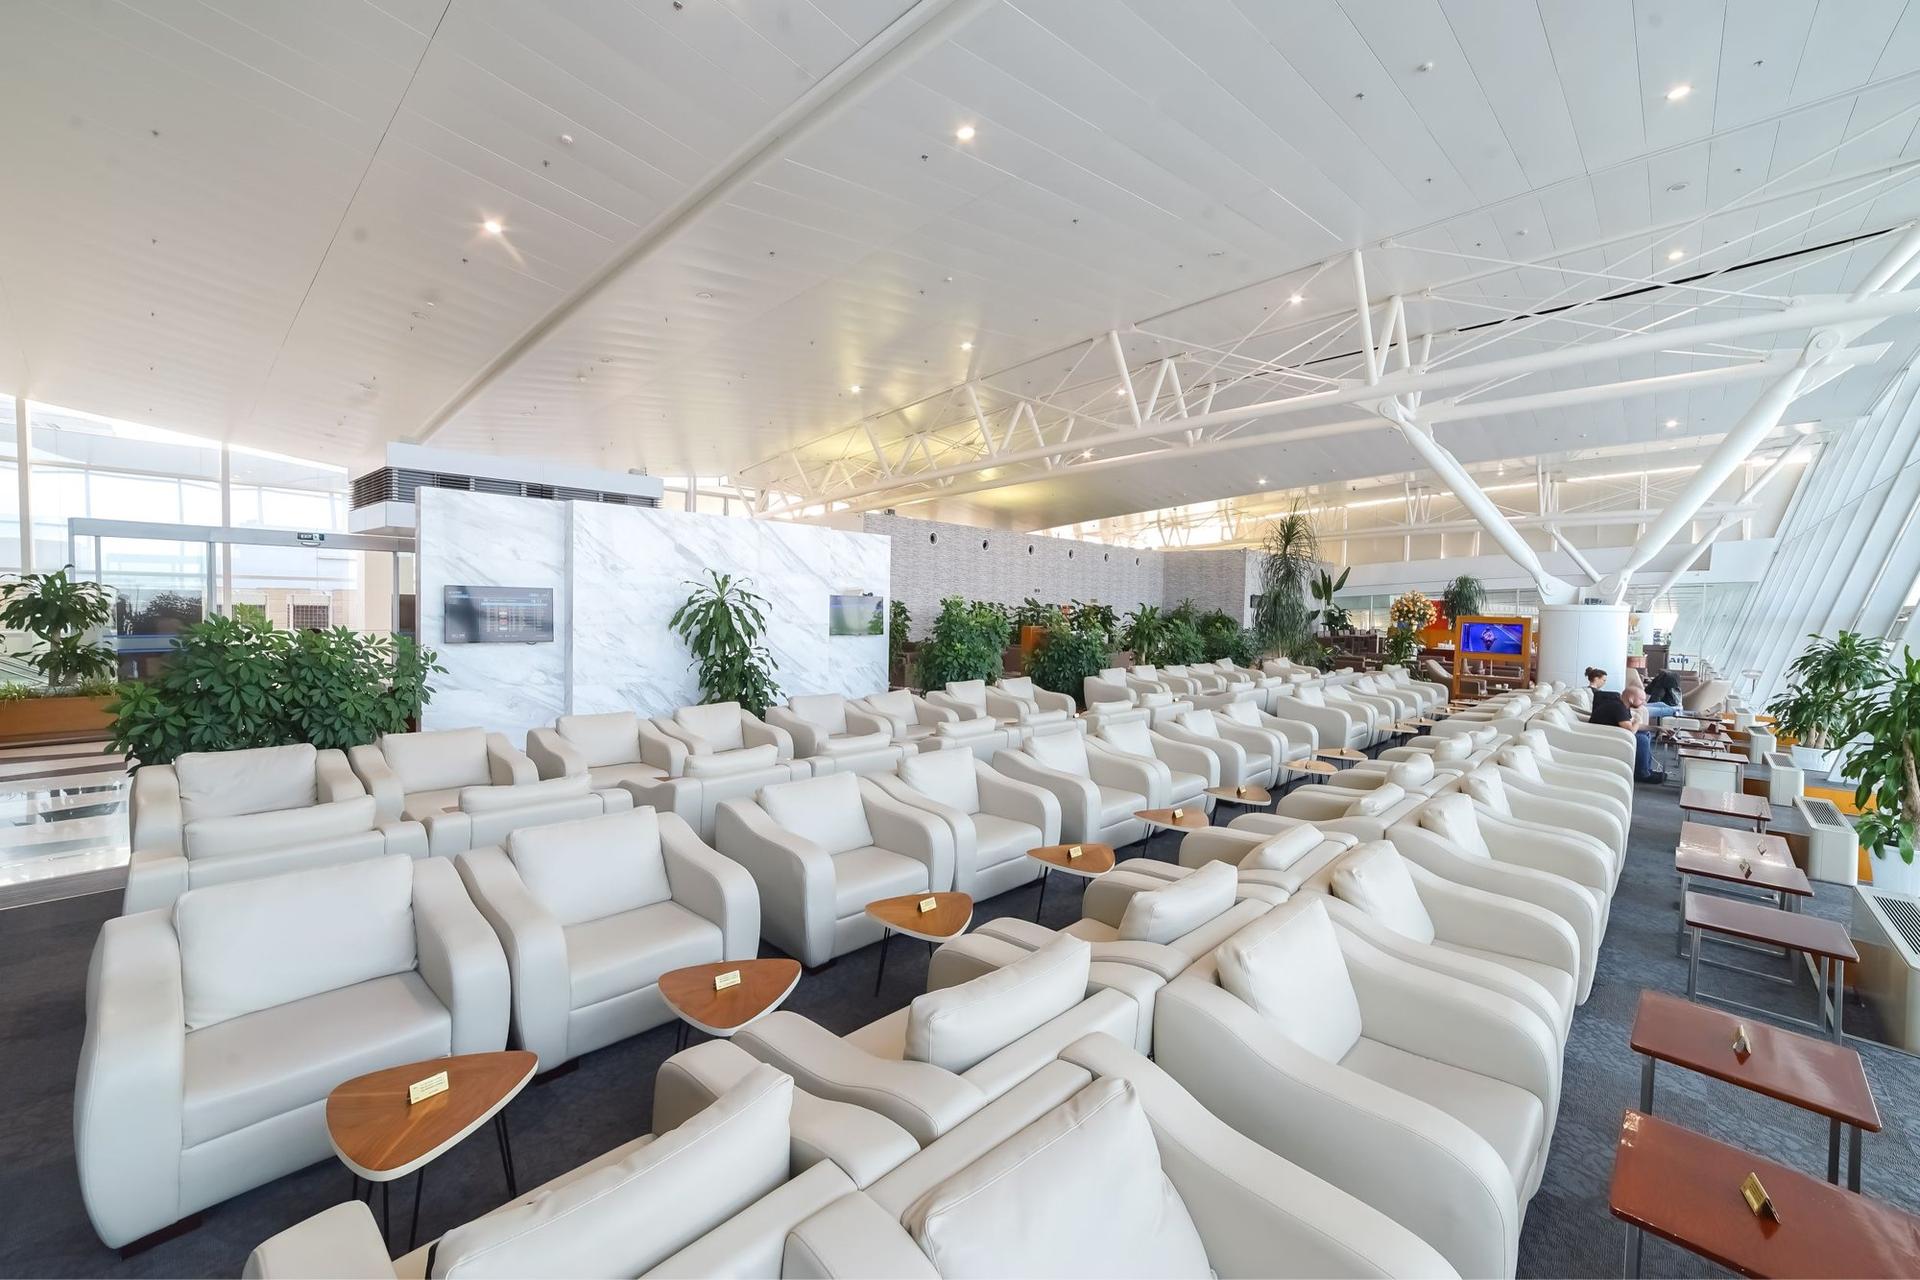 Noi Bai International Airport Business Lounge image 24 of 26